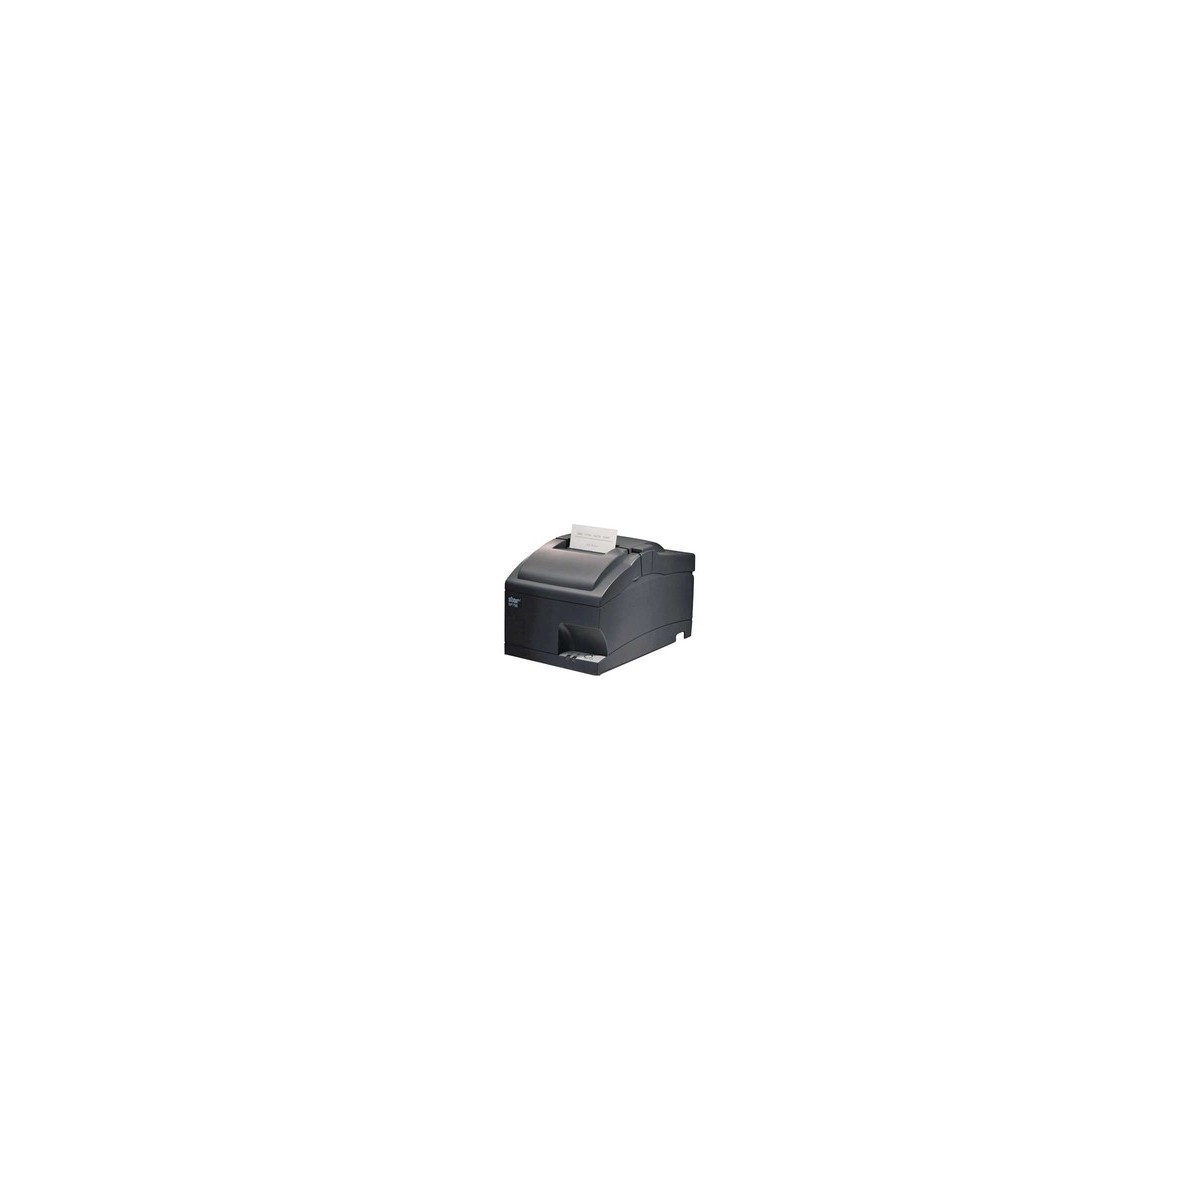 Star Micronics SP700 - Dot matrix - POS printer - 8.9 lps - 76 mm - Grey - 2.96 kg